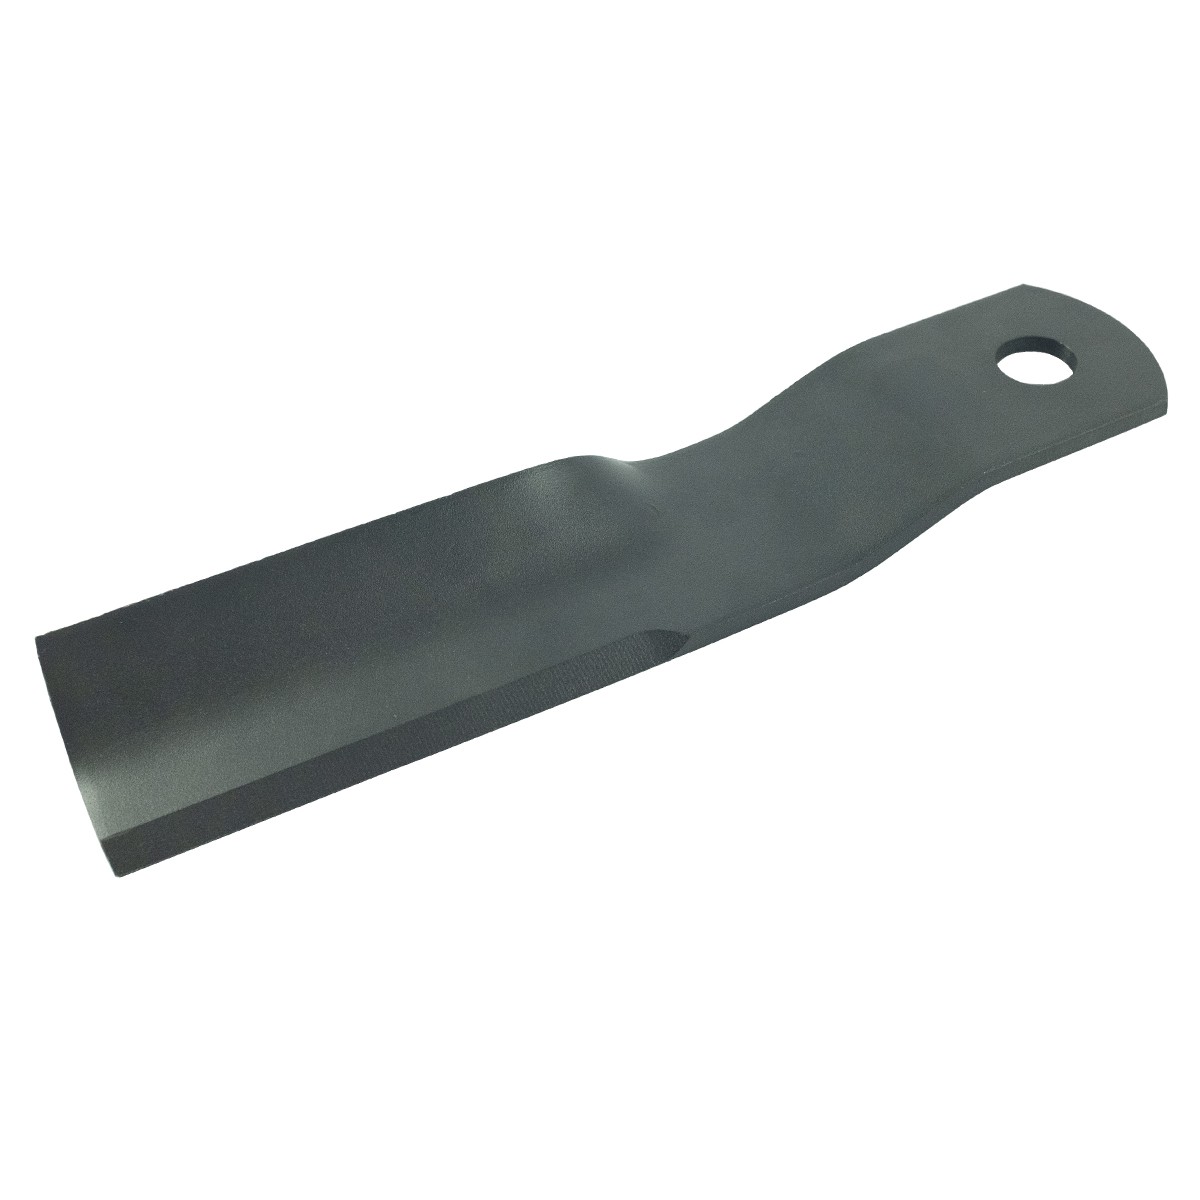 Cutting knife LEFT 283 x 60 mm / Iseki SCMA60 / Iseki SF450 / 8675-306-002-00